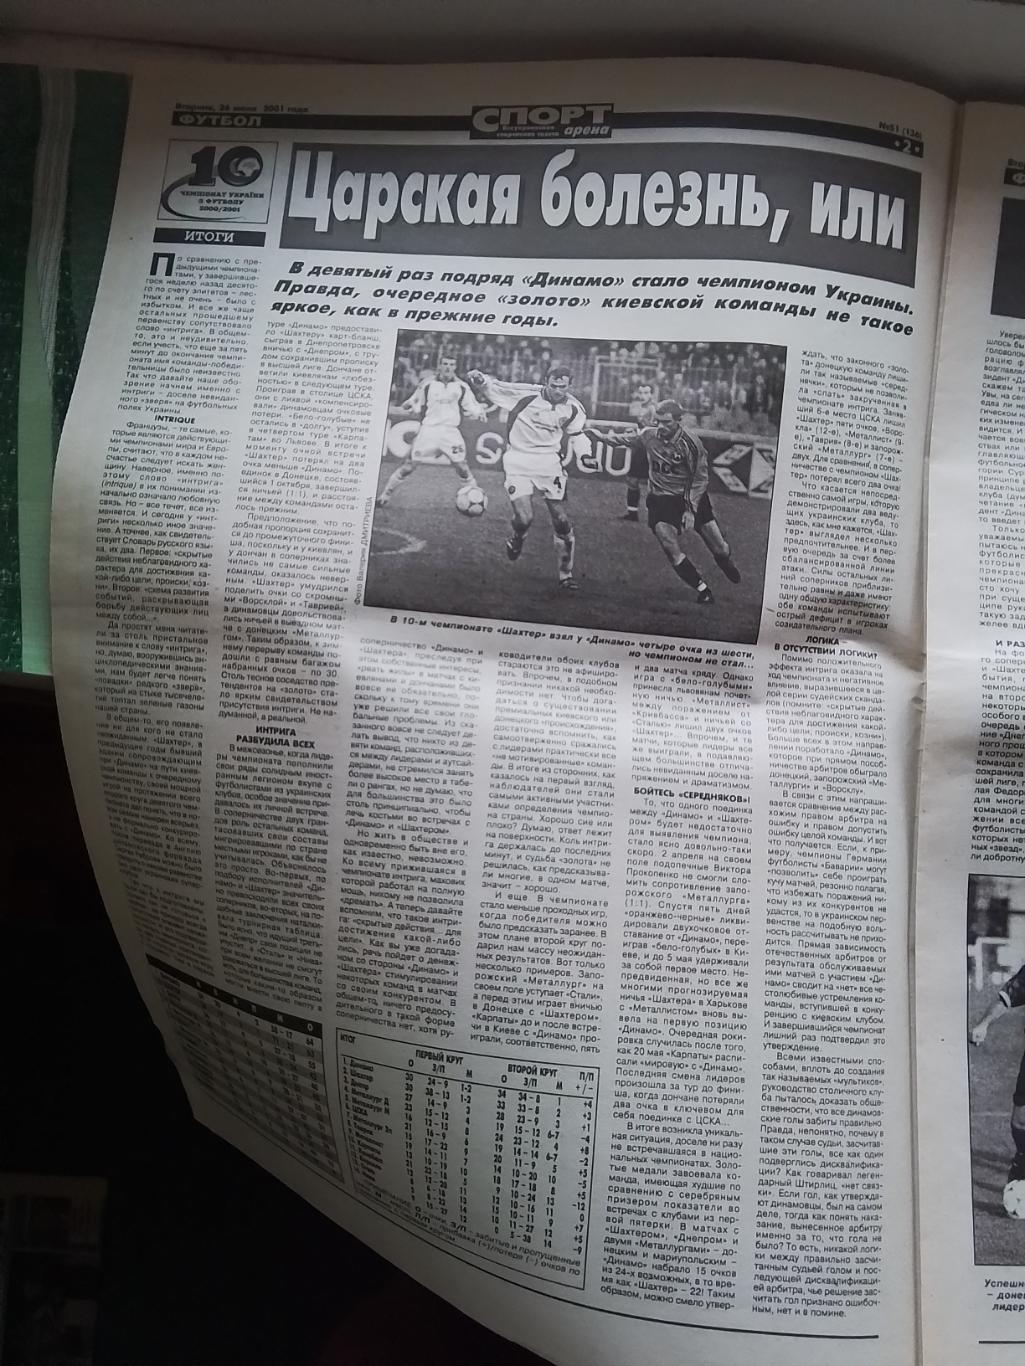 Газета Спортарена Киев 26 06 200151 (136) Динамо - чемпион ЧМ U-20 США Украина 1